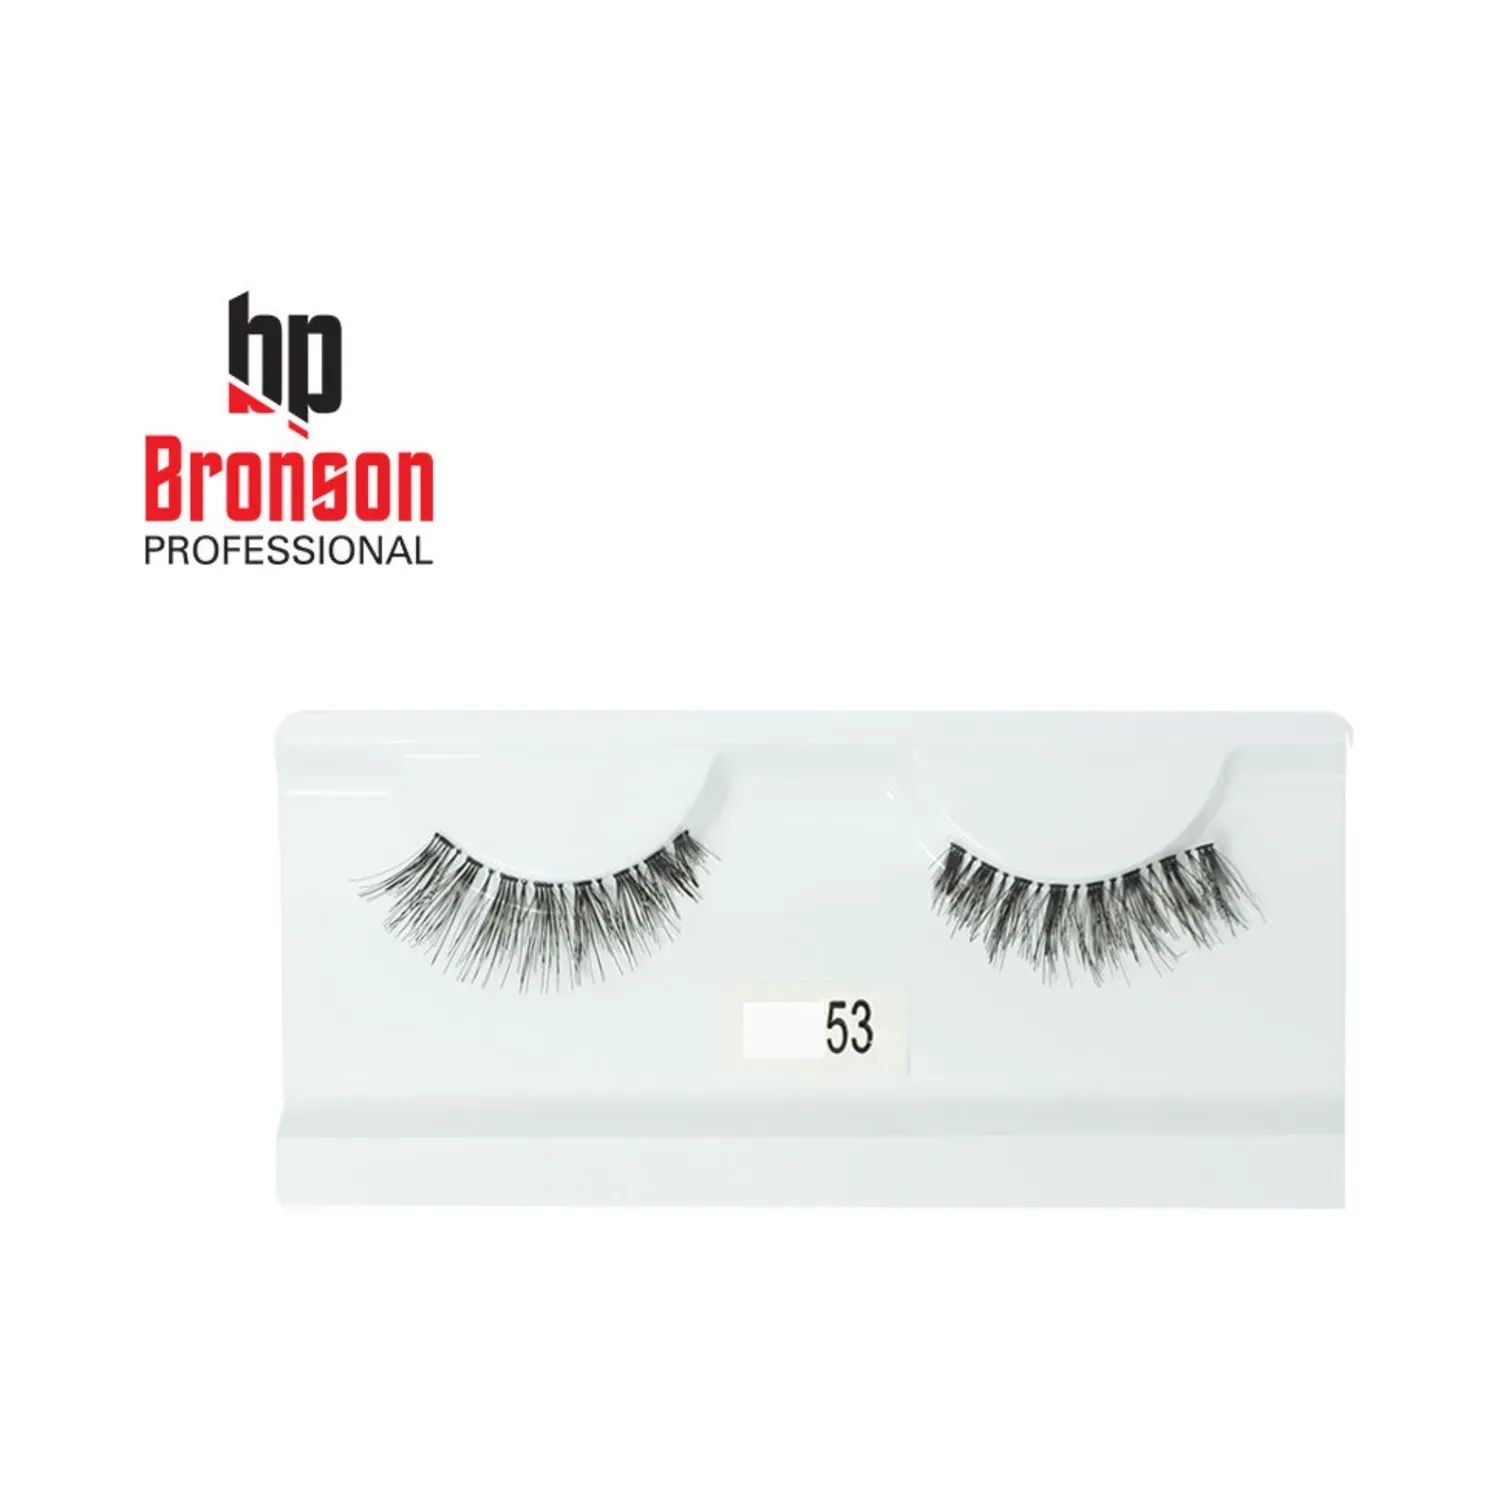 Bronson Professional | Bronson Professional Eyelashes - 53 Black (1 Pair)